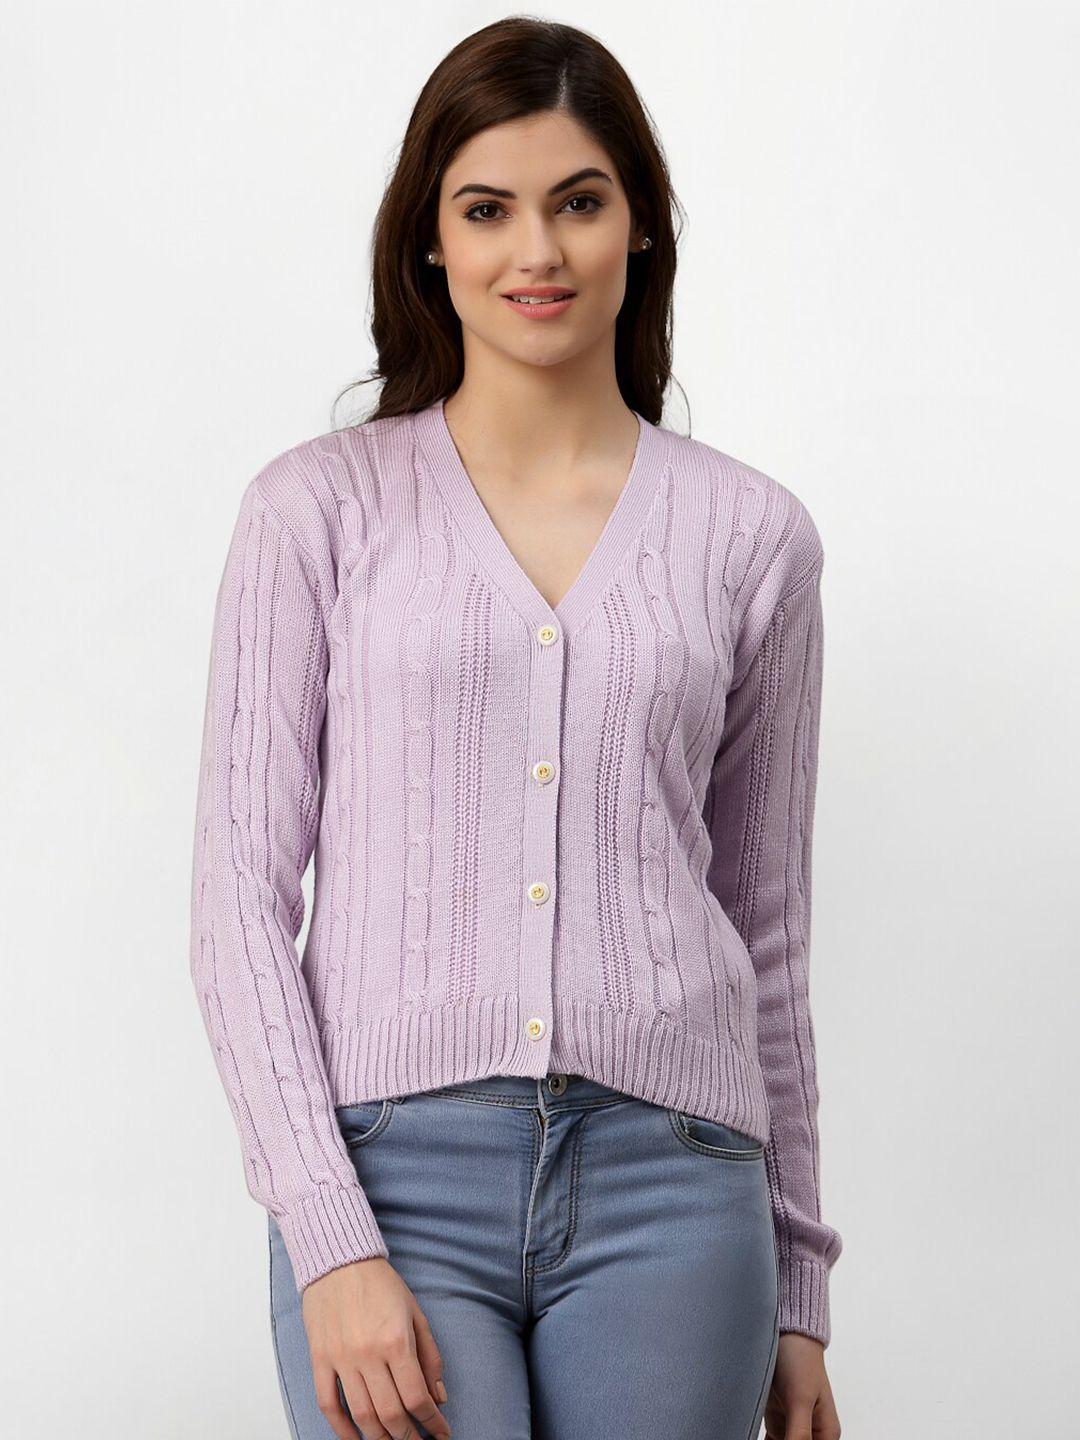 miramor women lavender cable knit cardigan